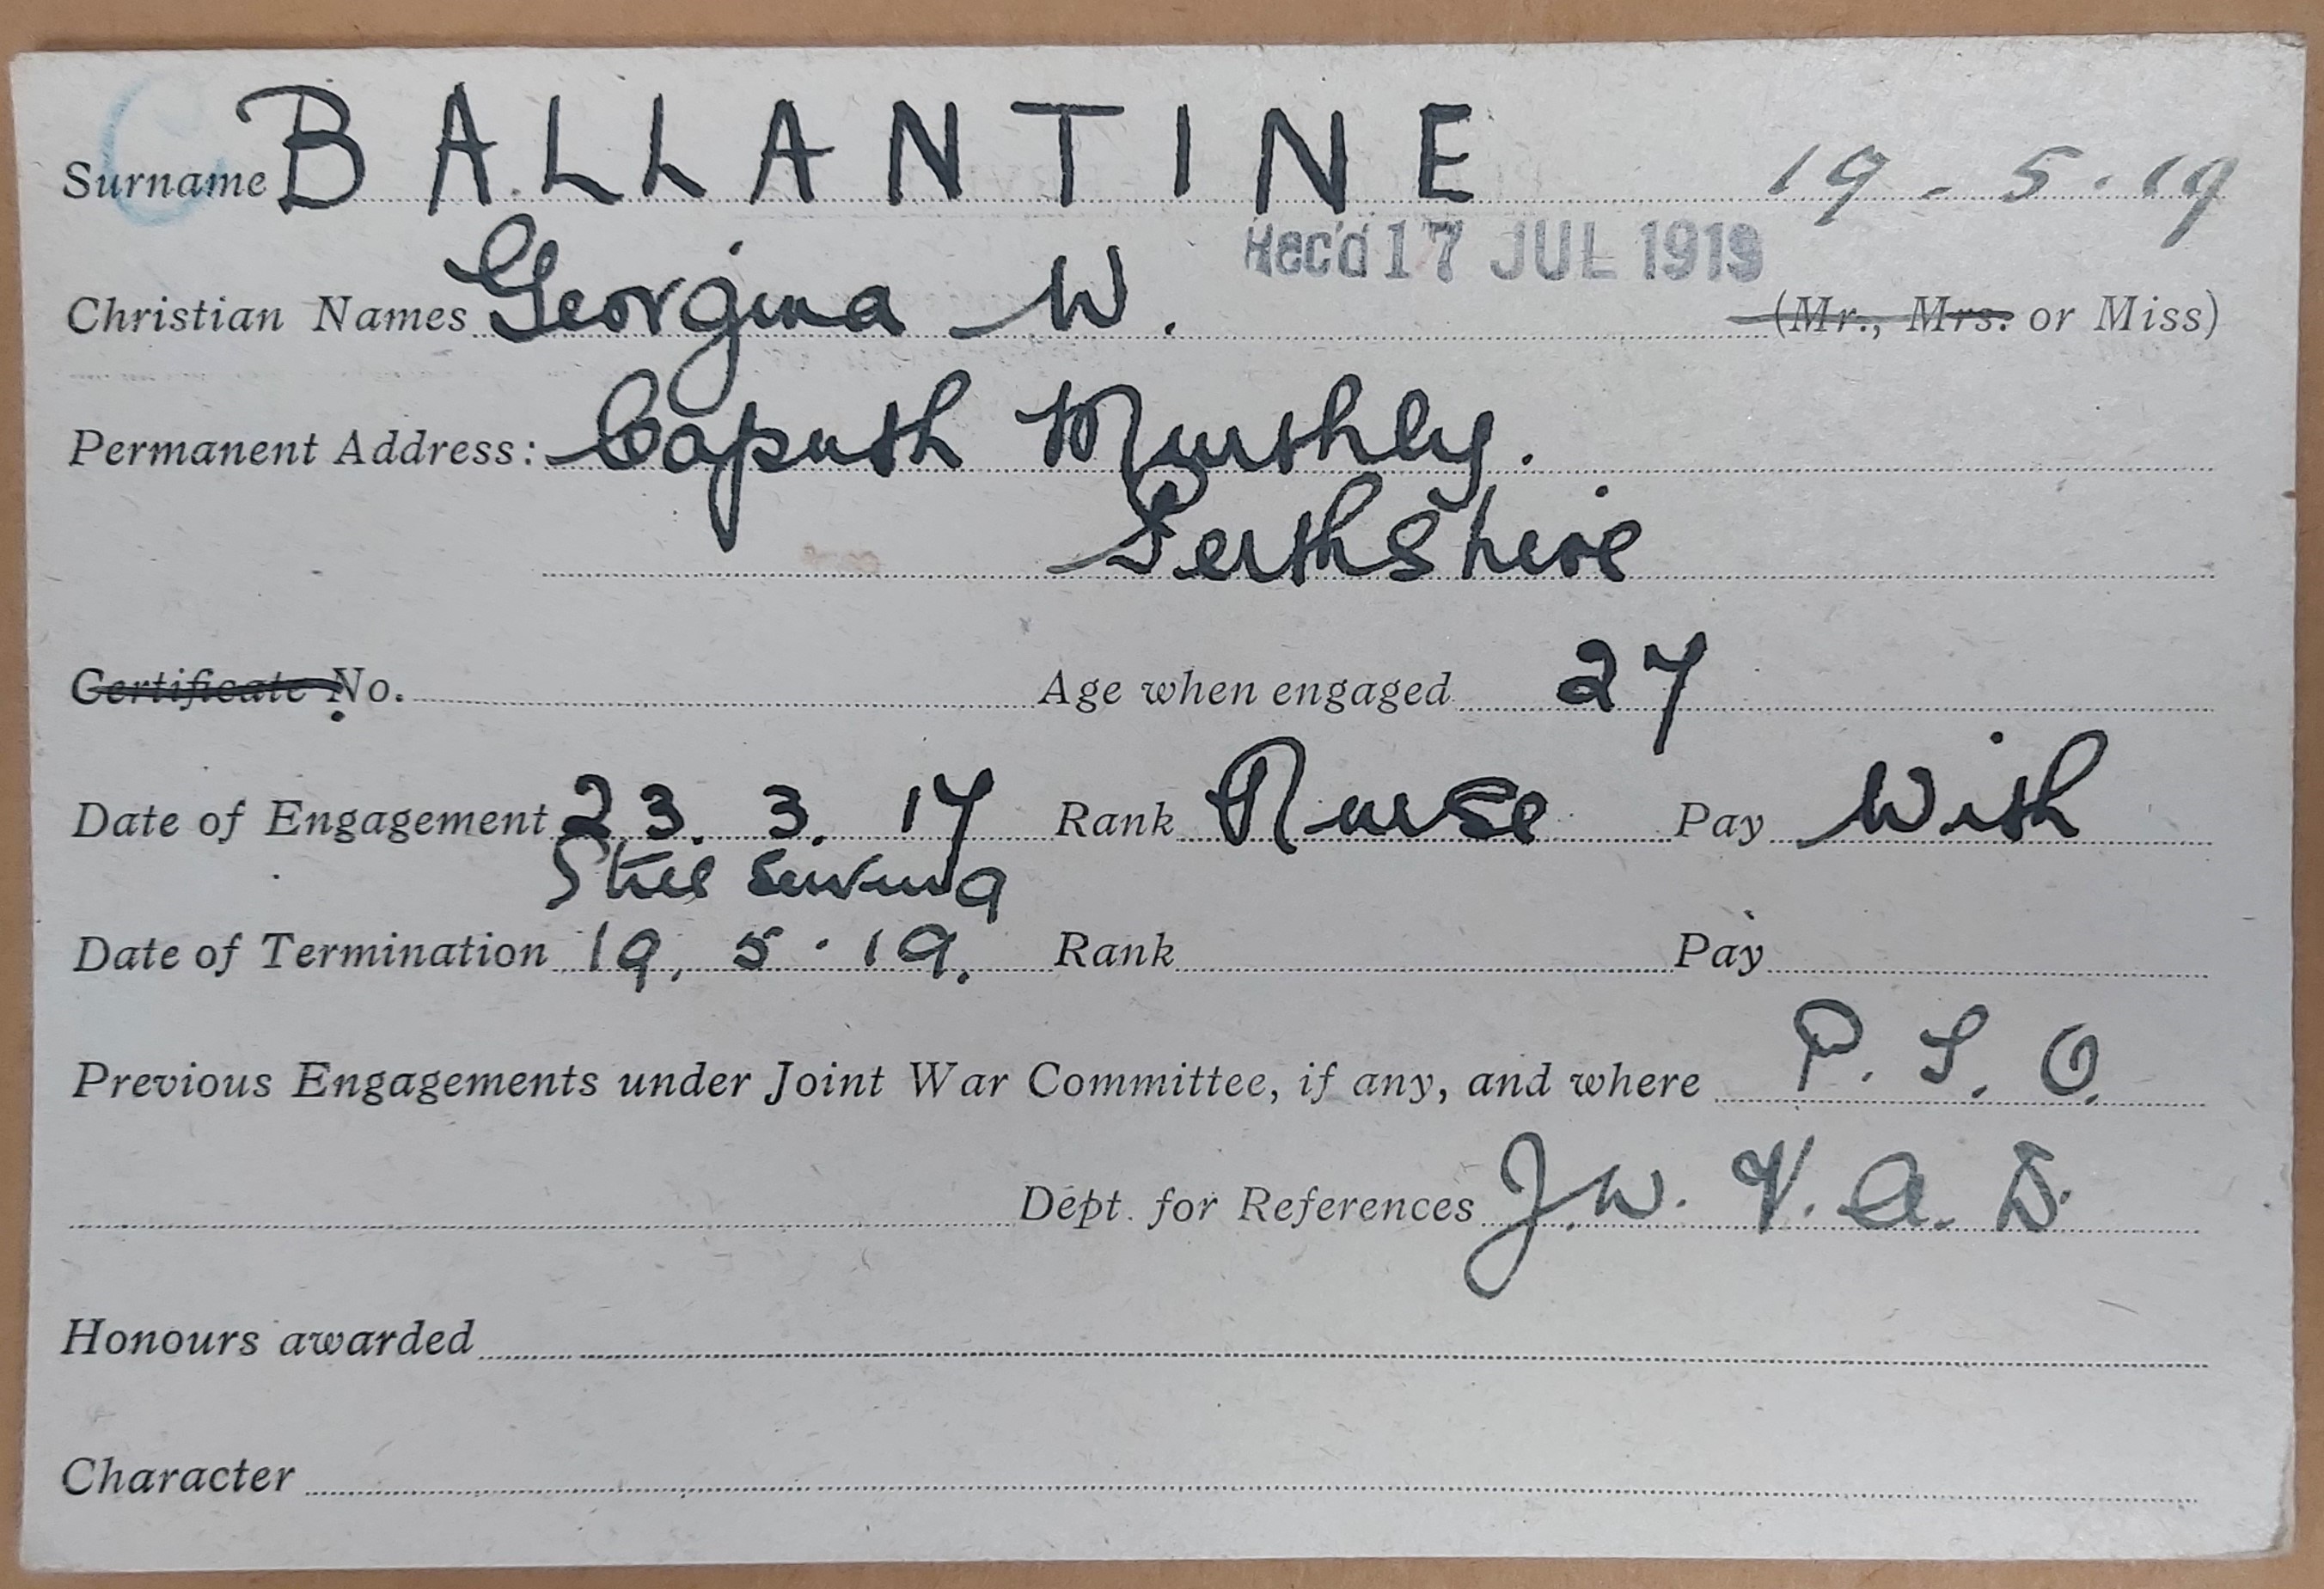 Georgina Ballantine's VAD card